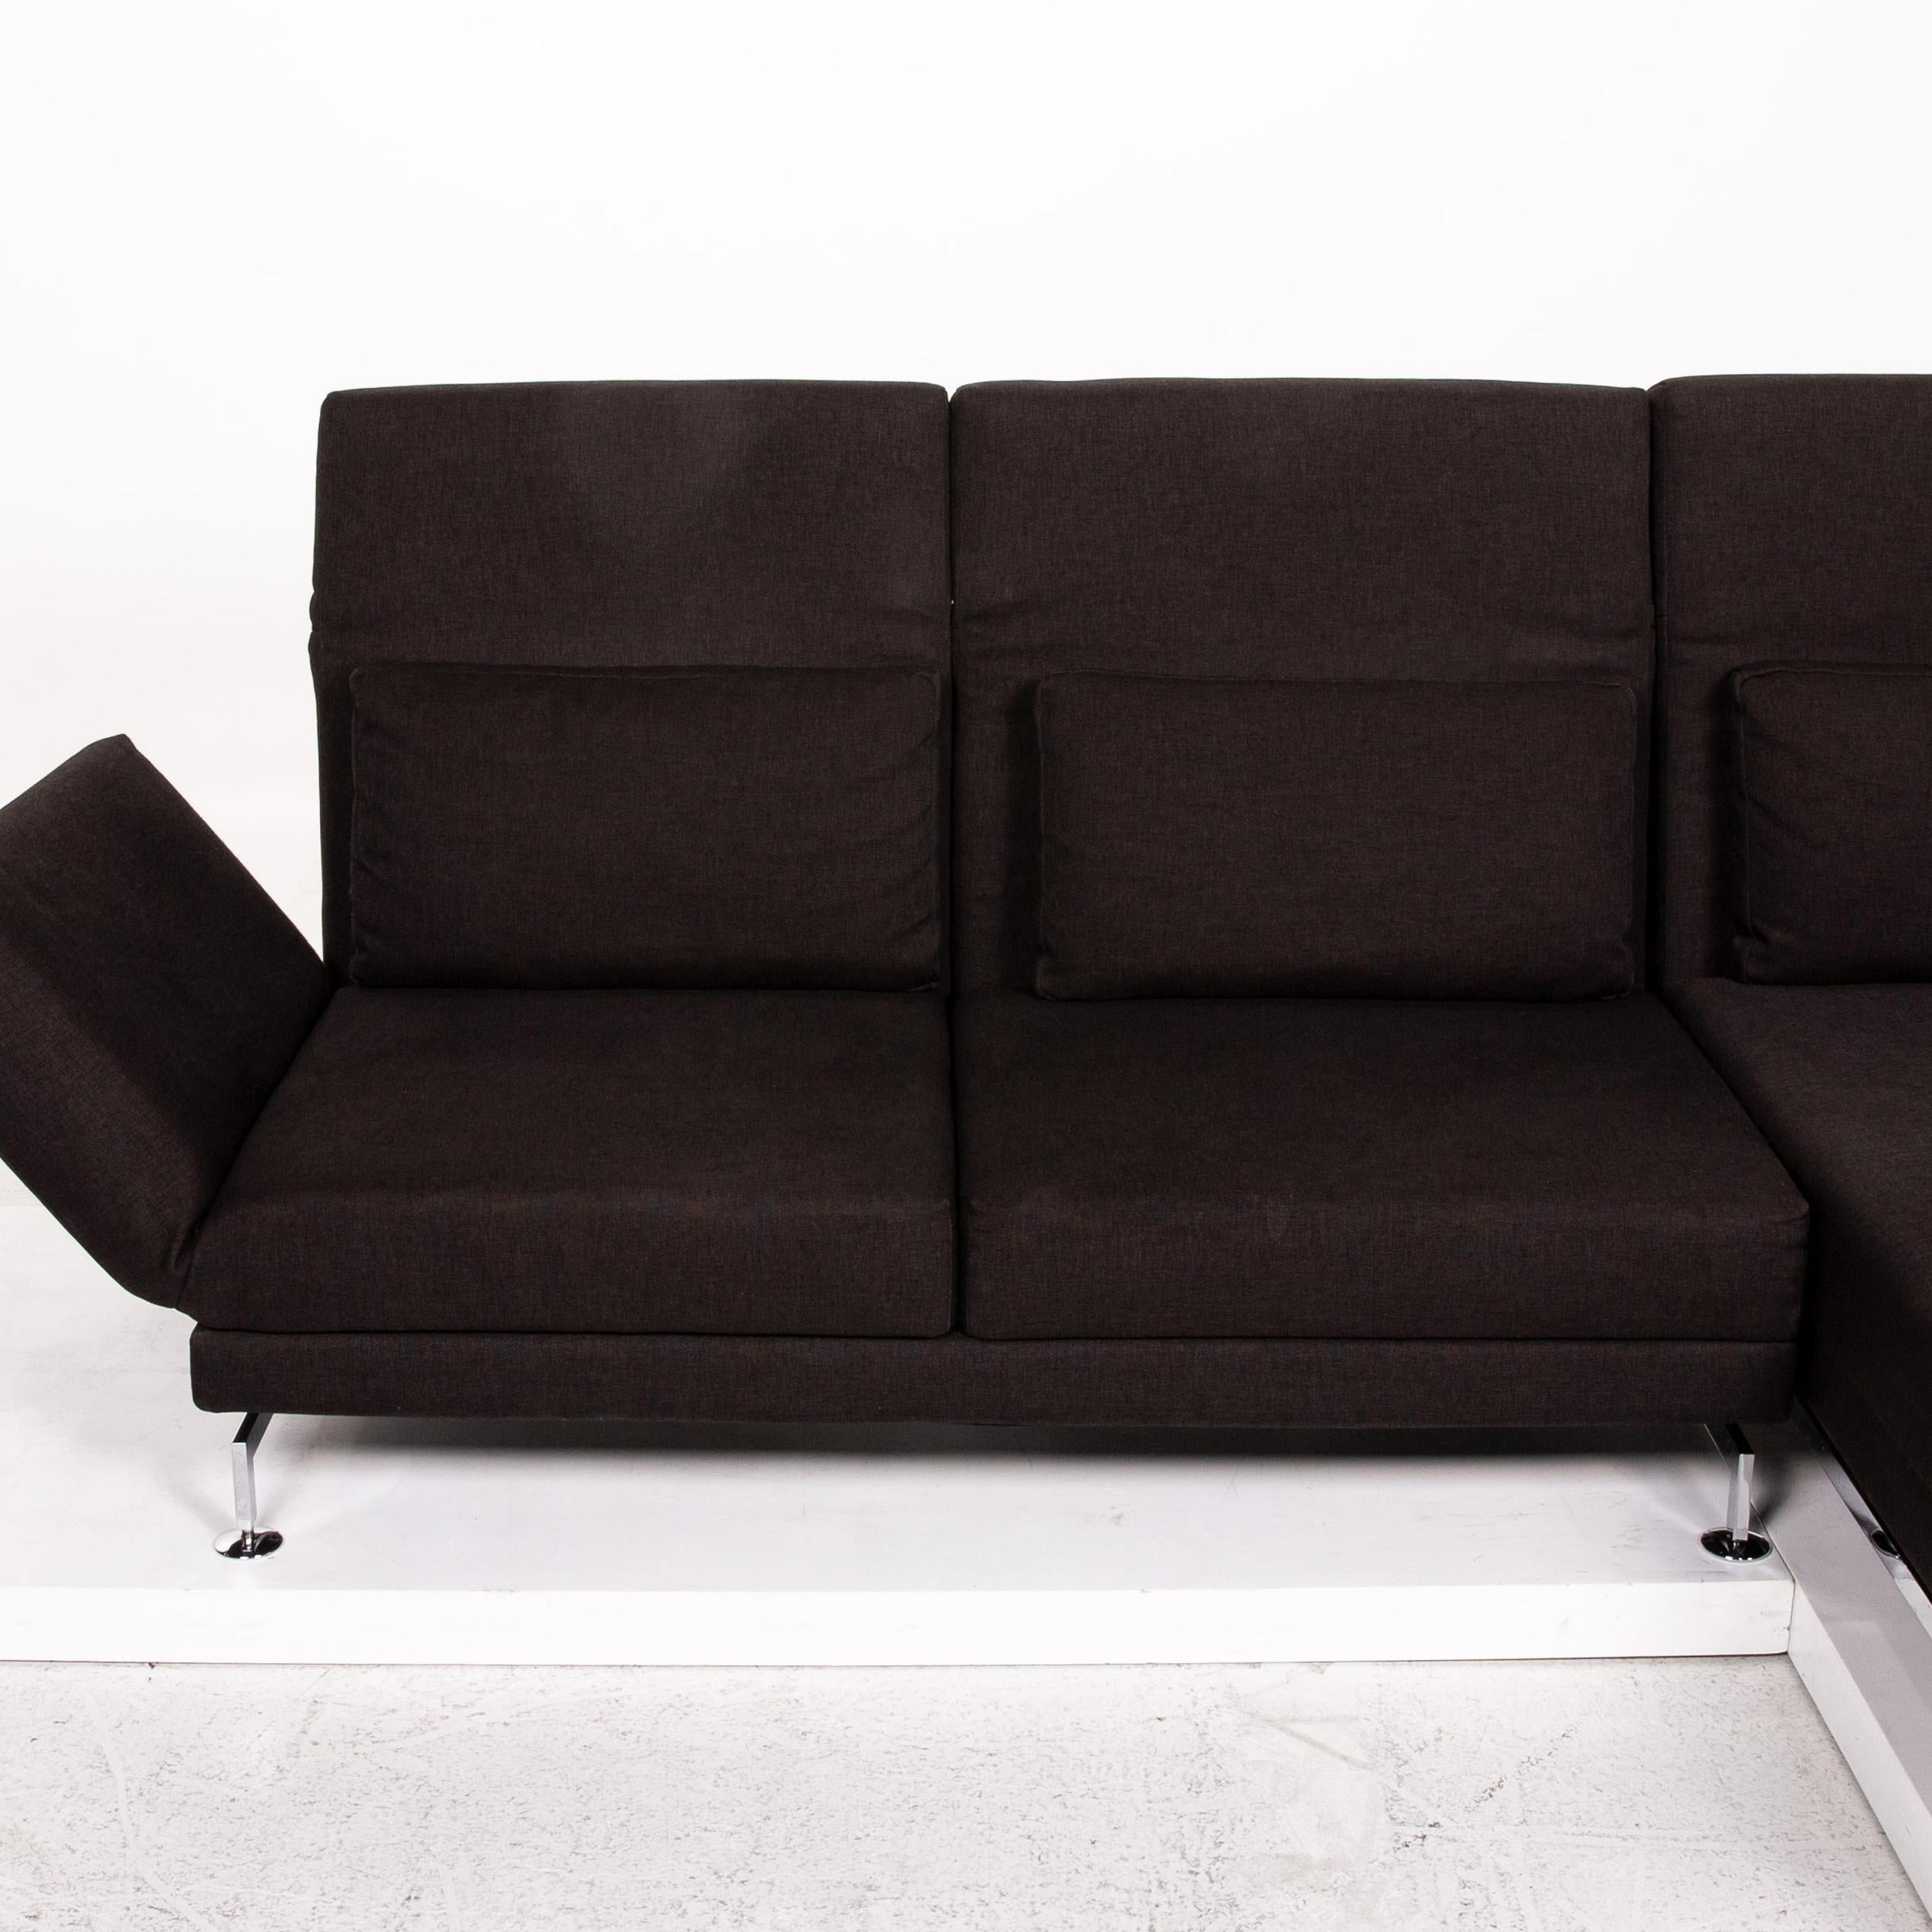 Brühl & Sippold Moule Fabric Corner Sofa Brown Dark Brown Function Sleep For Sale 1